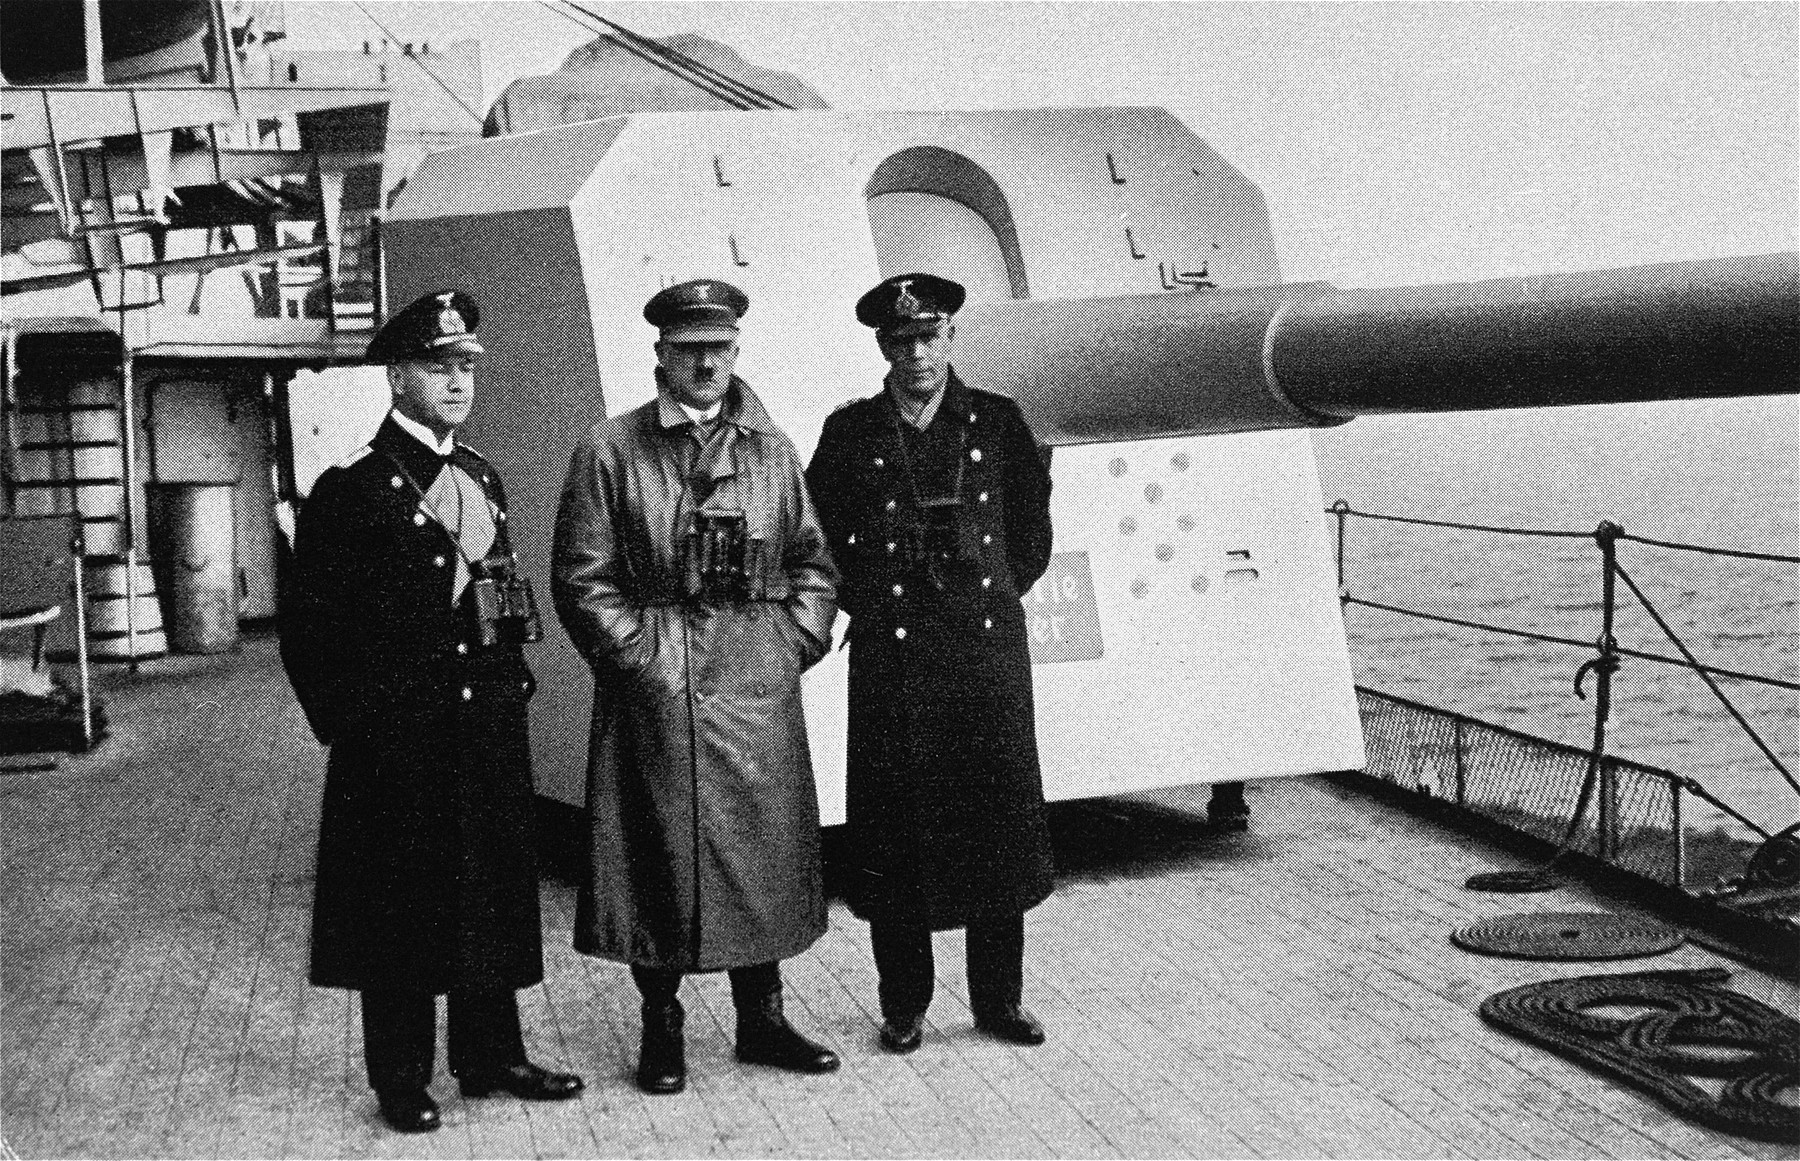 During the inspection of the Deutschland battleship